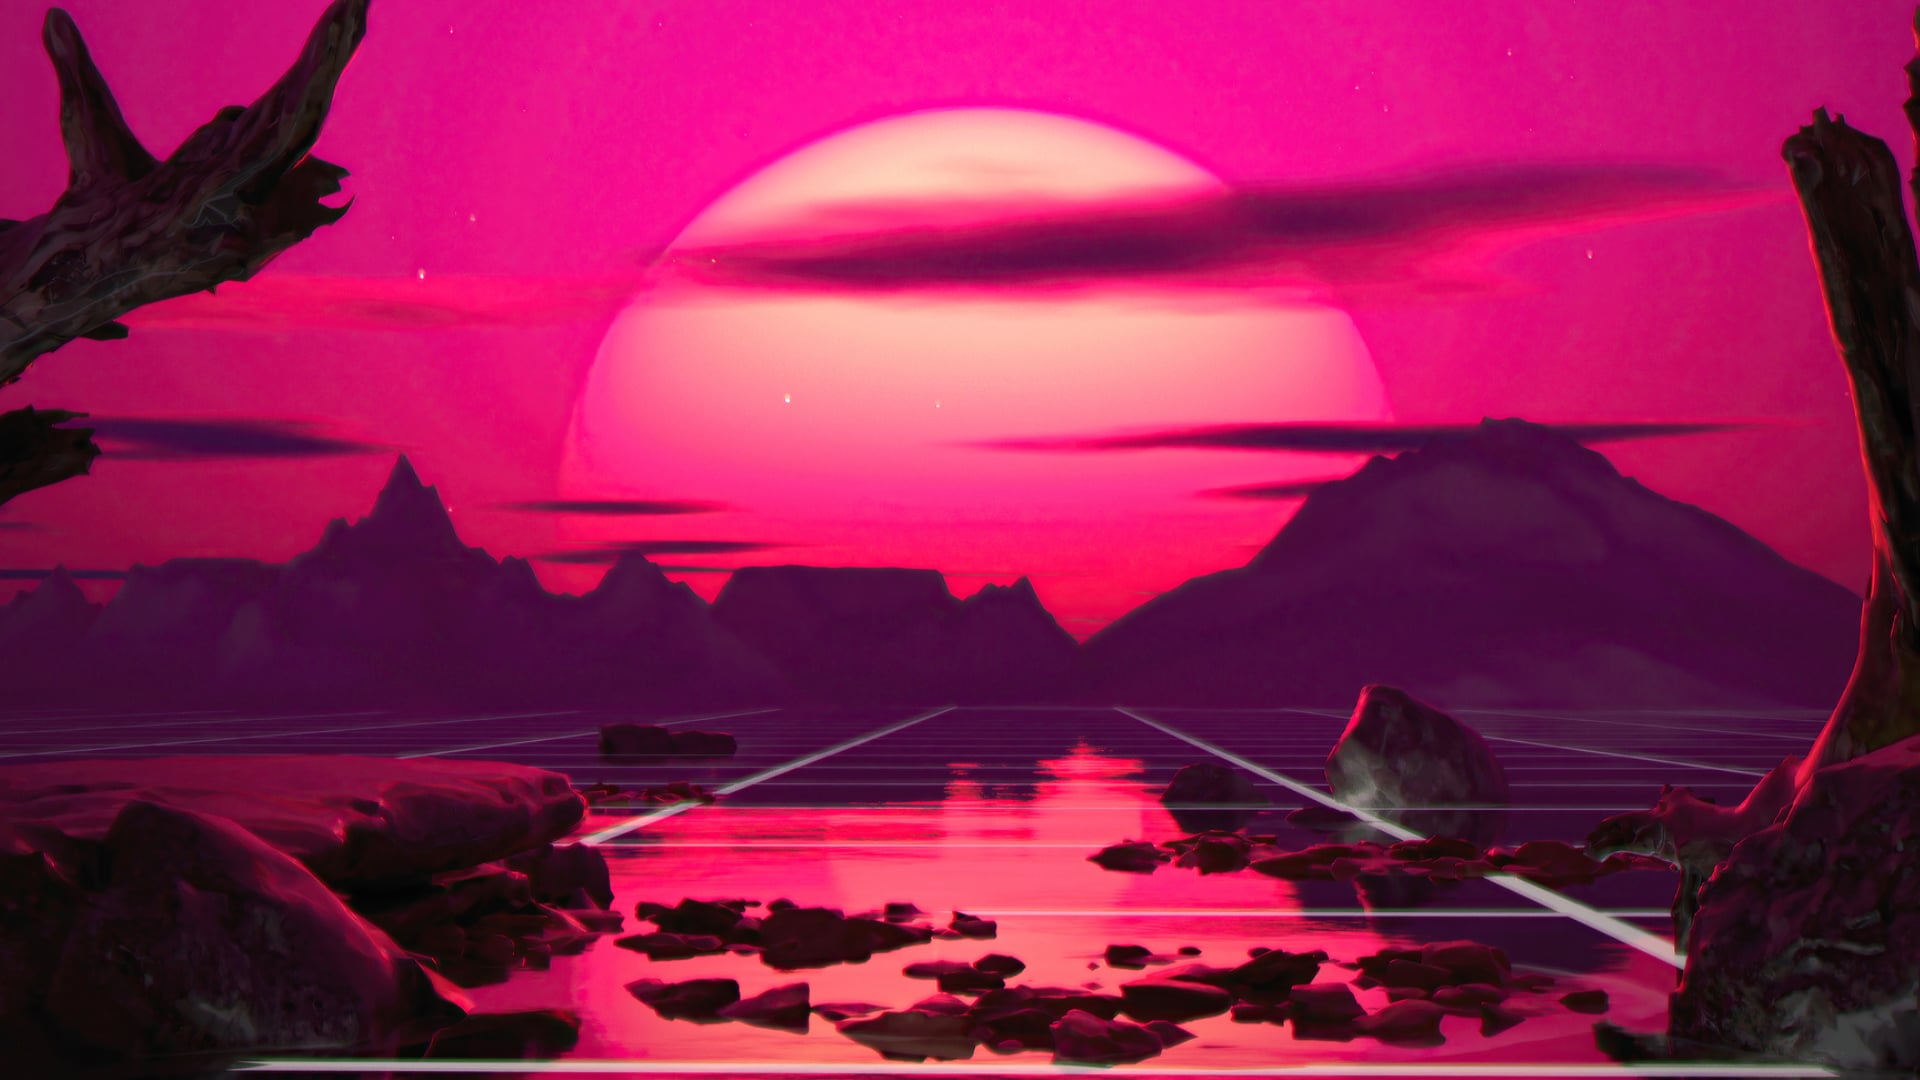 Digital Art Sunset wallpapers HD quality